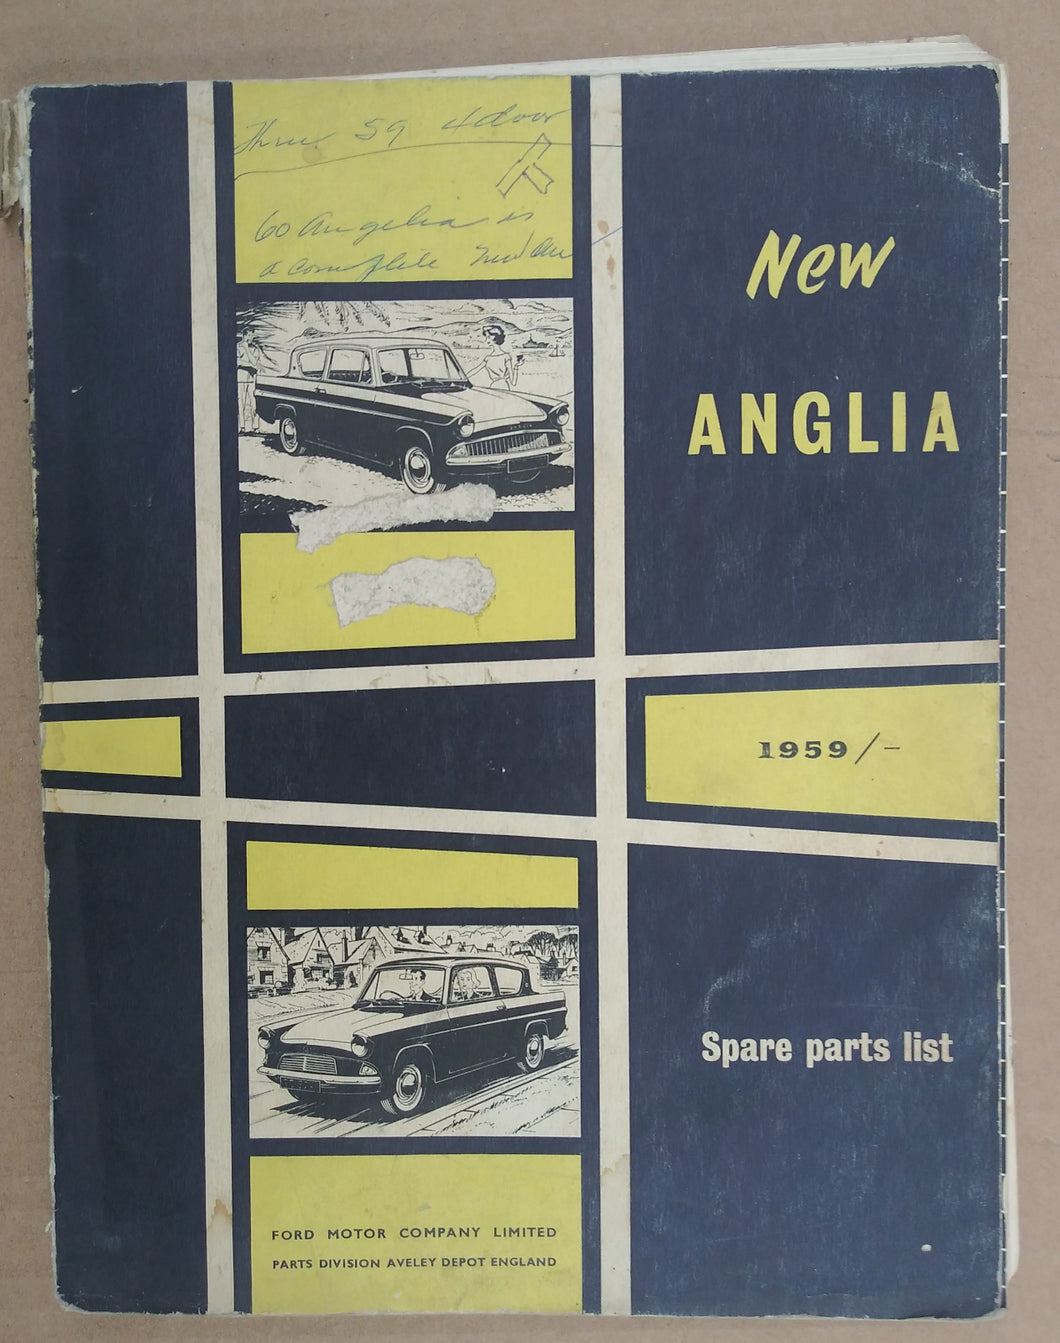 1959 English Ford Anglia spare parts list